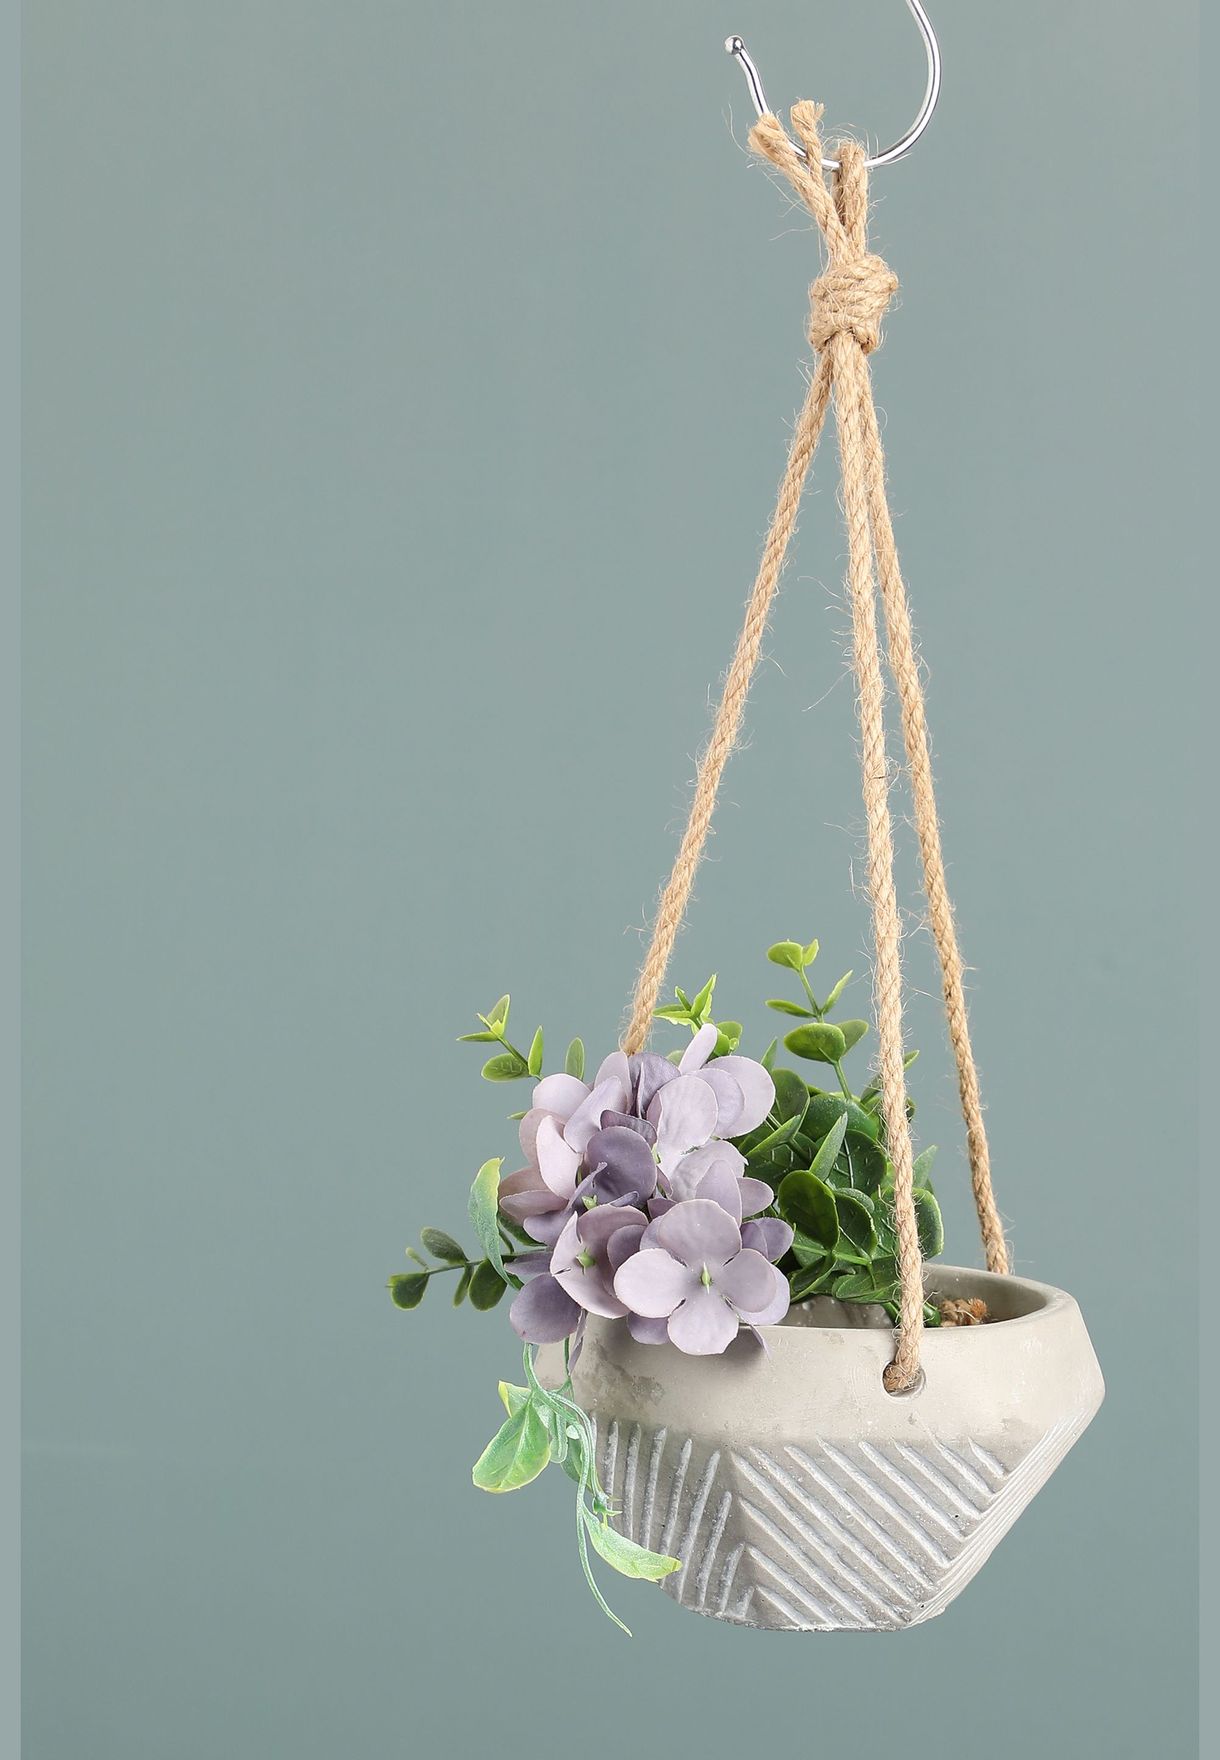 Ceramic Planter in Hanging Basket For Home Décor